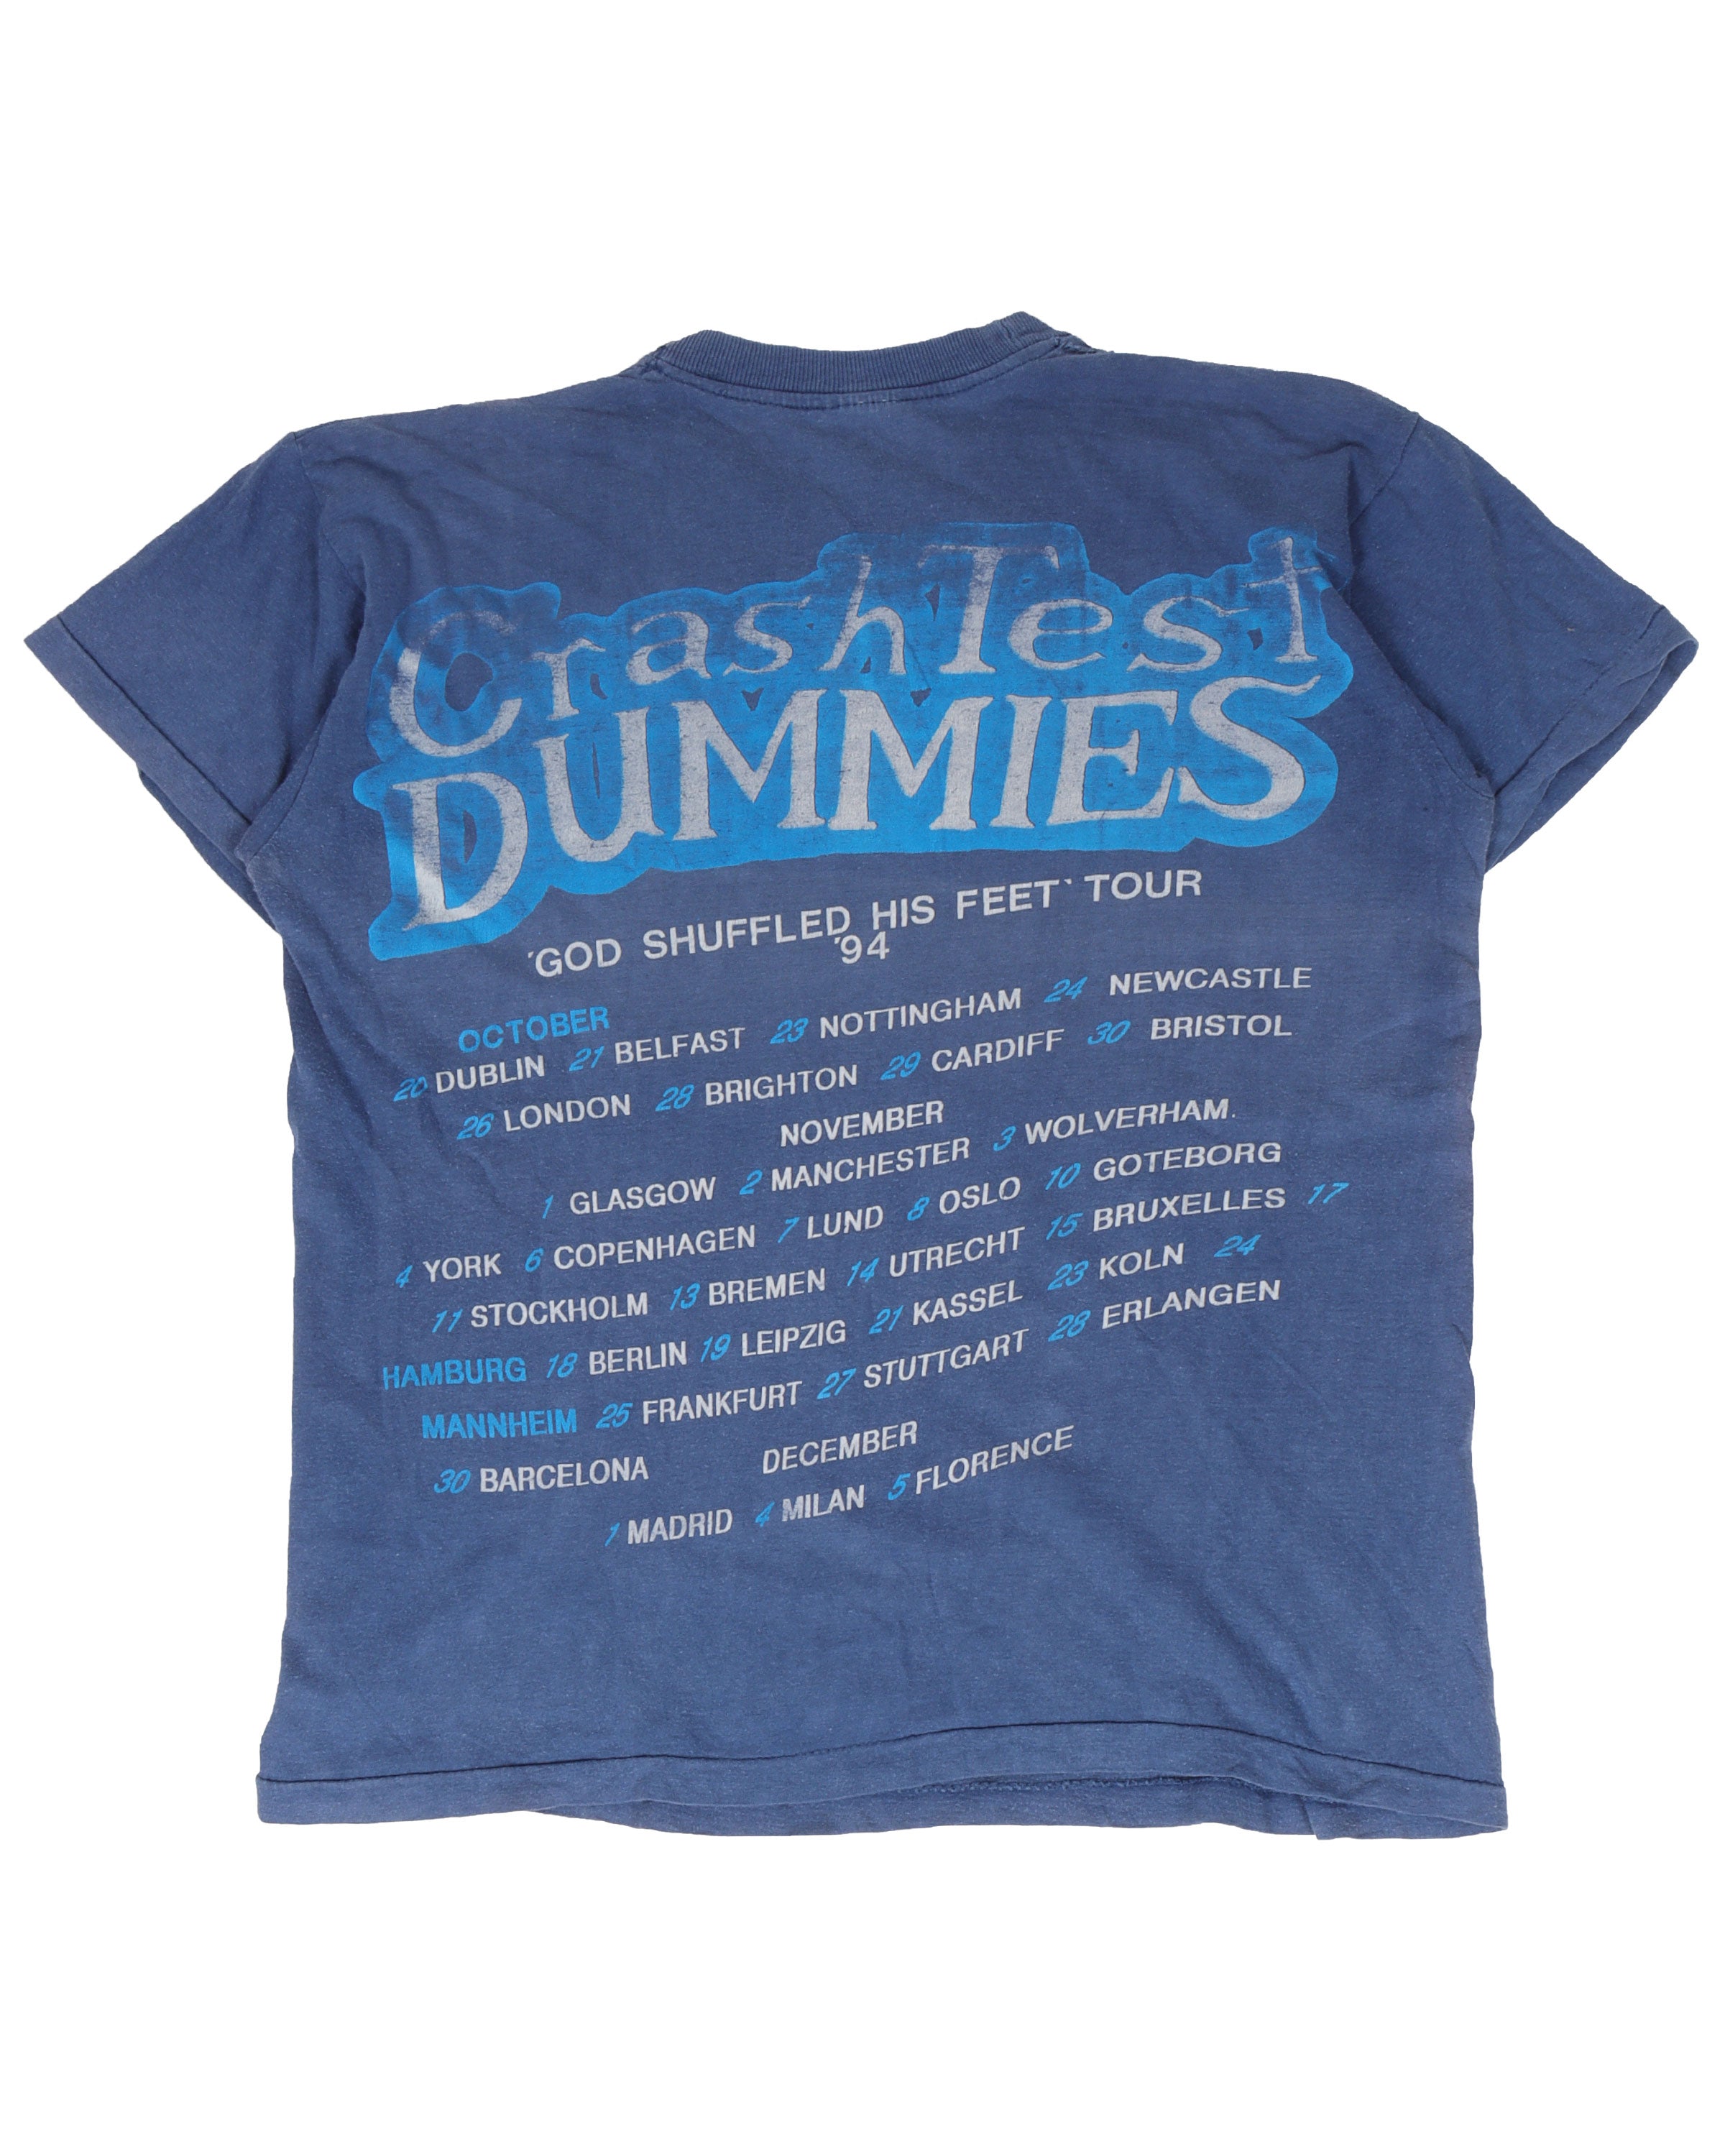 Crash Test Dummies 1994 "God Shuffled His Feet" Tour T-Shirt